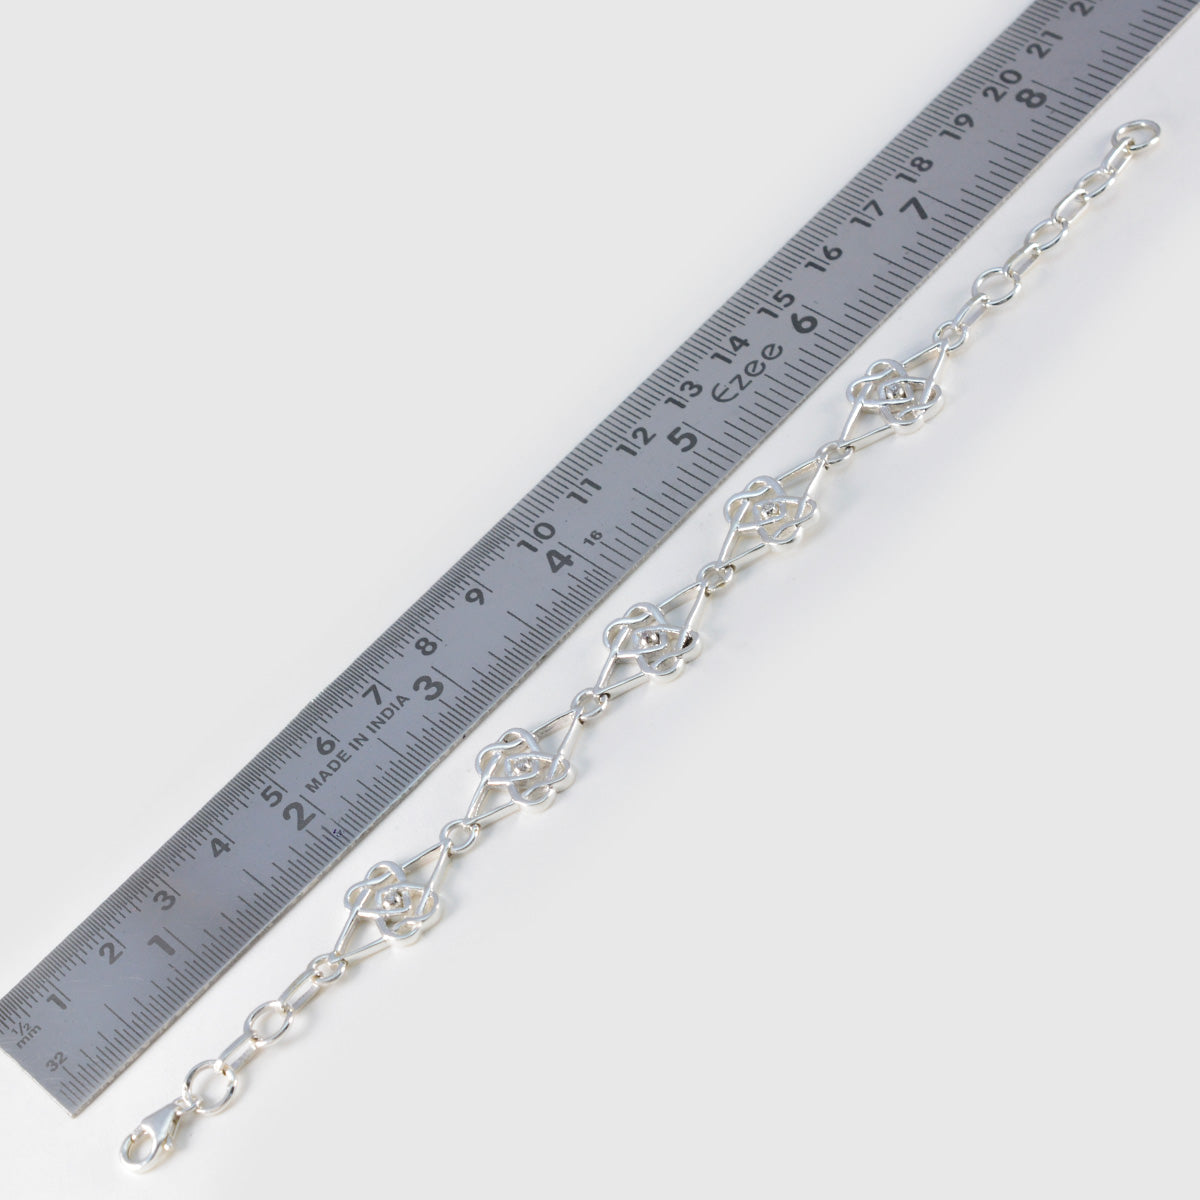 Riyo In Quantity 925 Sterling Silver Bracelet For Womens White CZ Bracelet Bezel Setting Bracelet with Fish Hook Link Bracelet L Size 6-8.5 Inch.